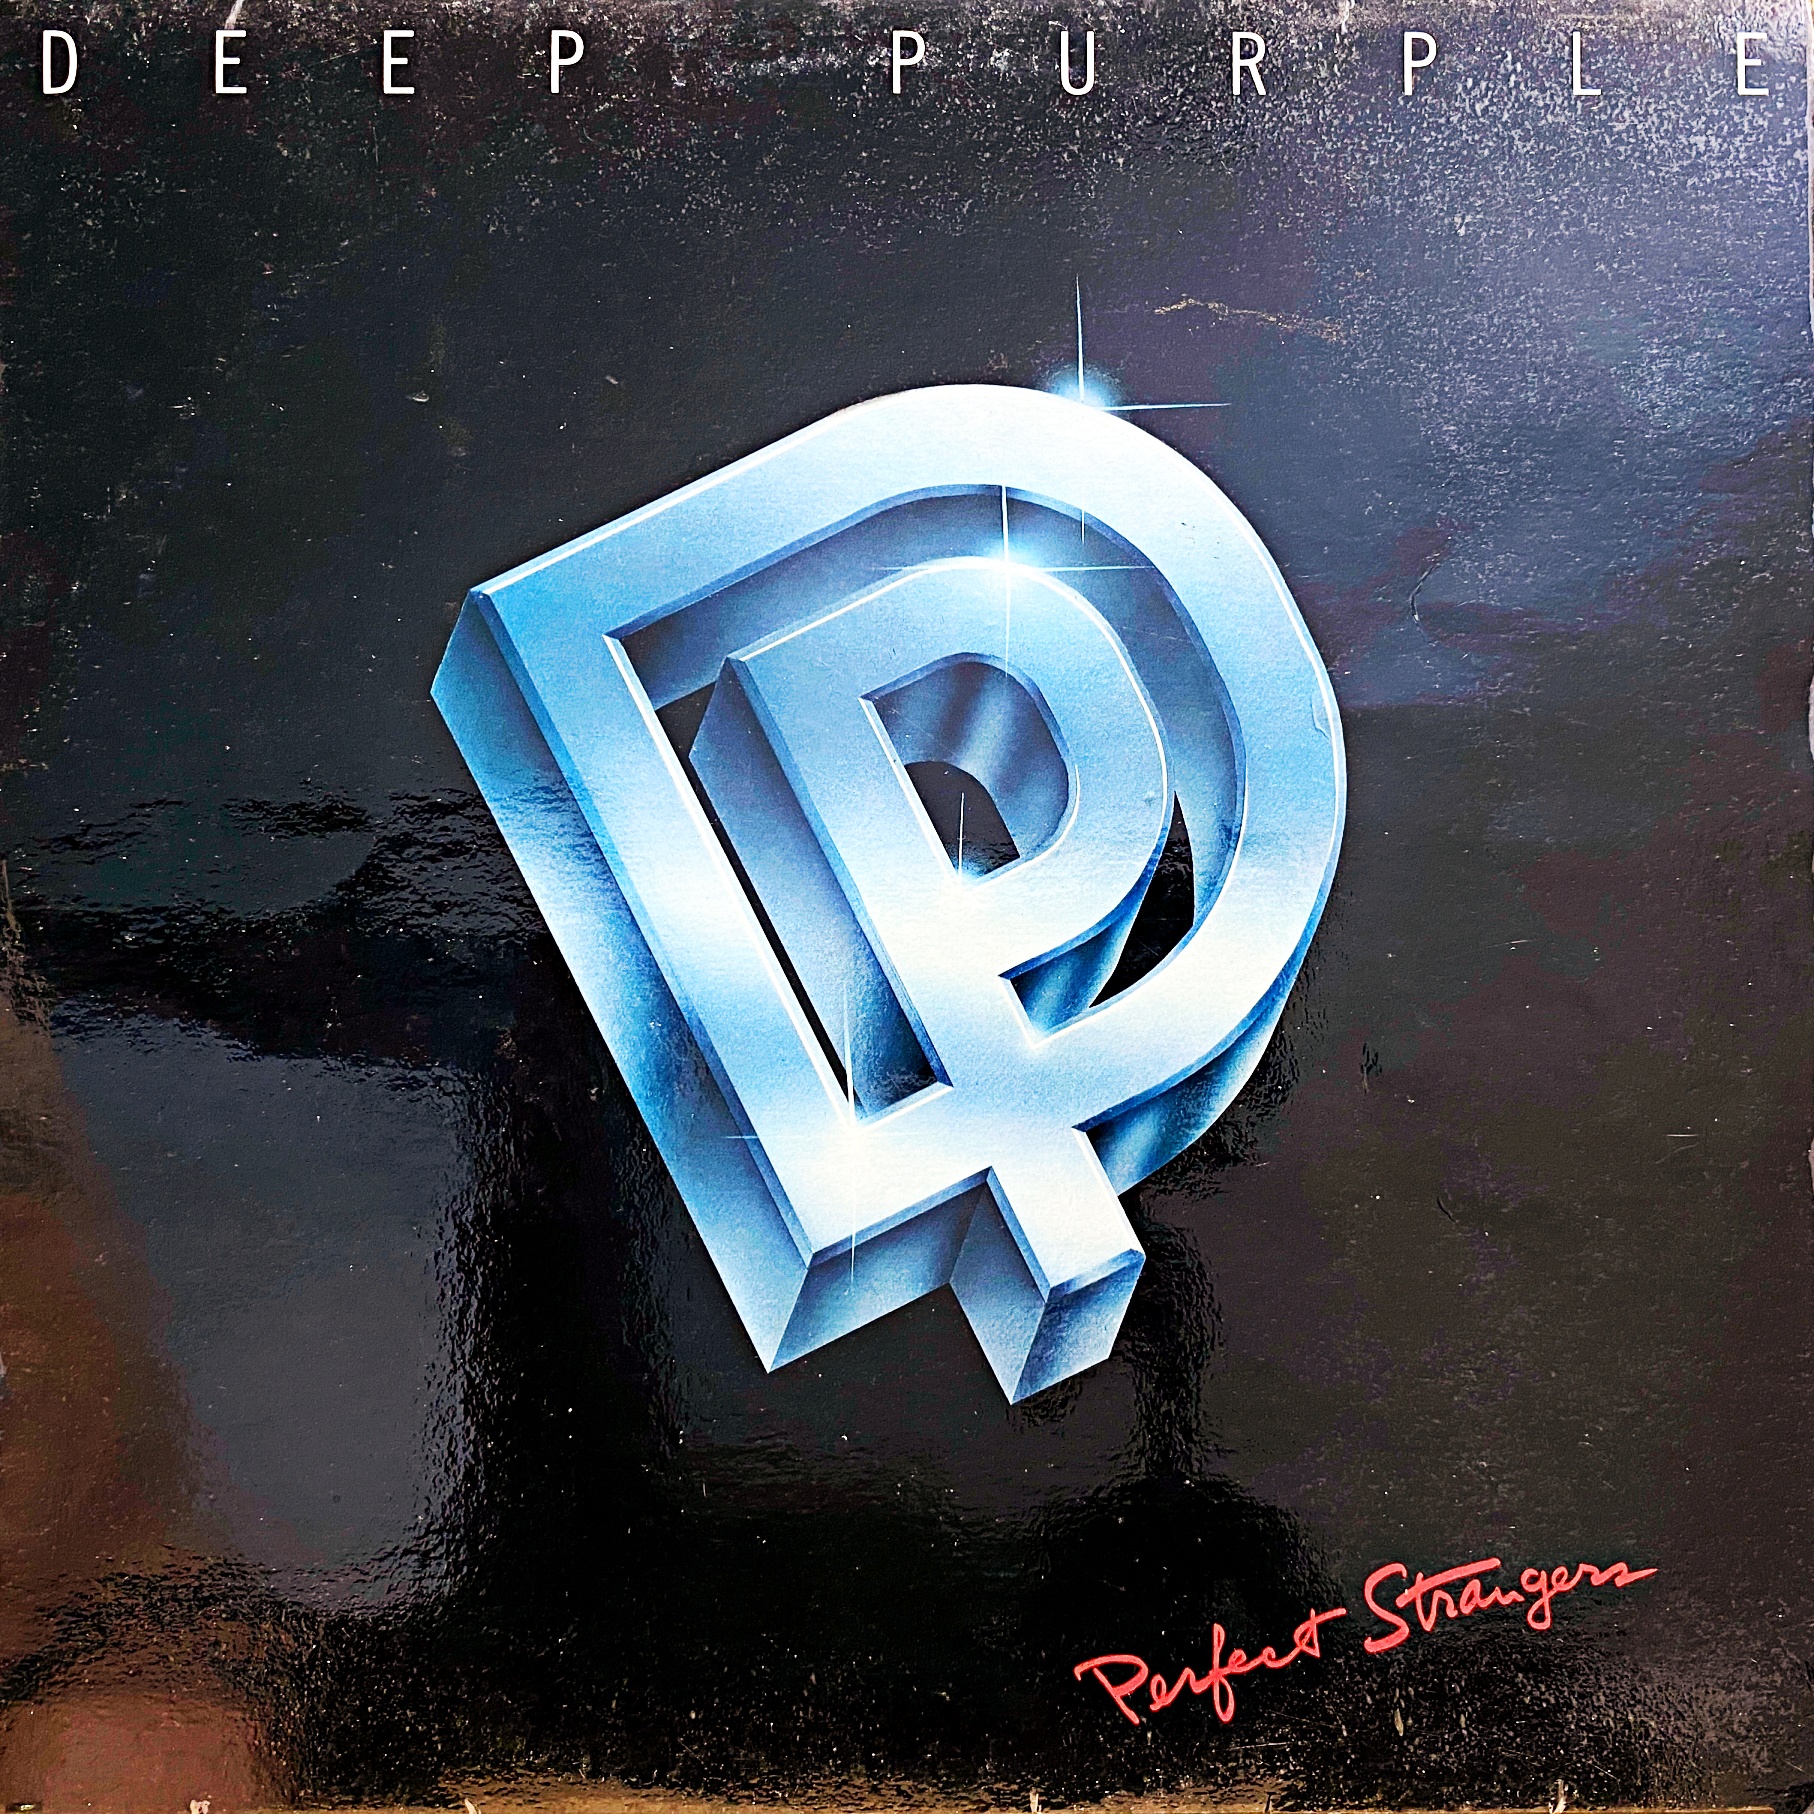 LP Deep Purple ‎– Perfect Strangers